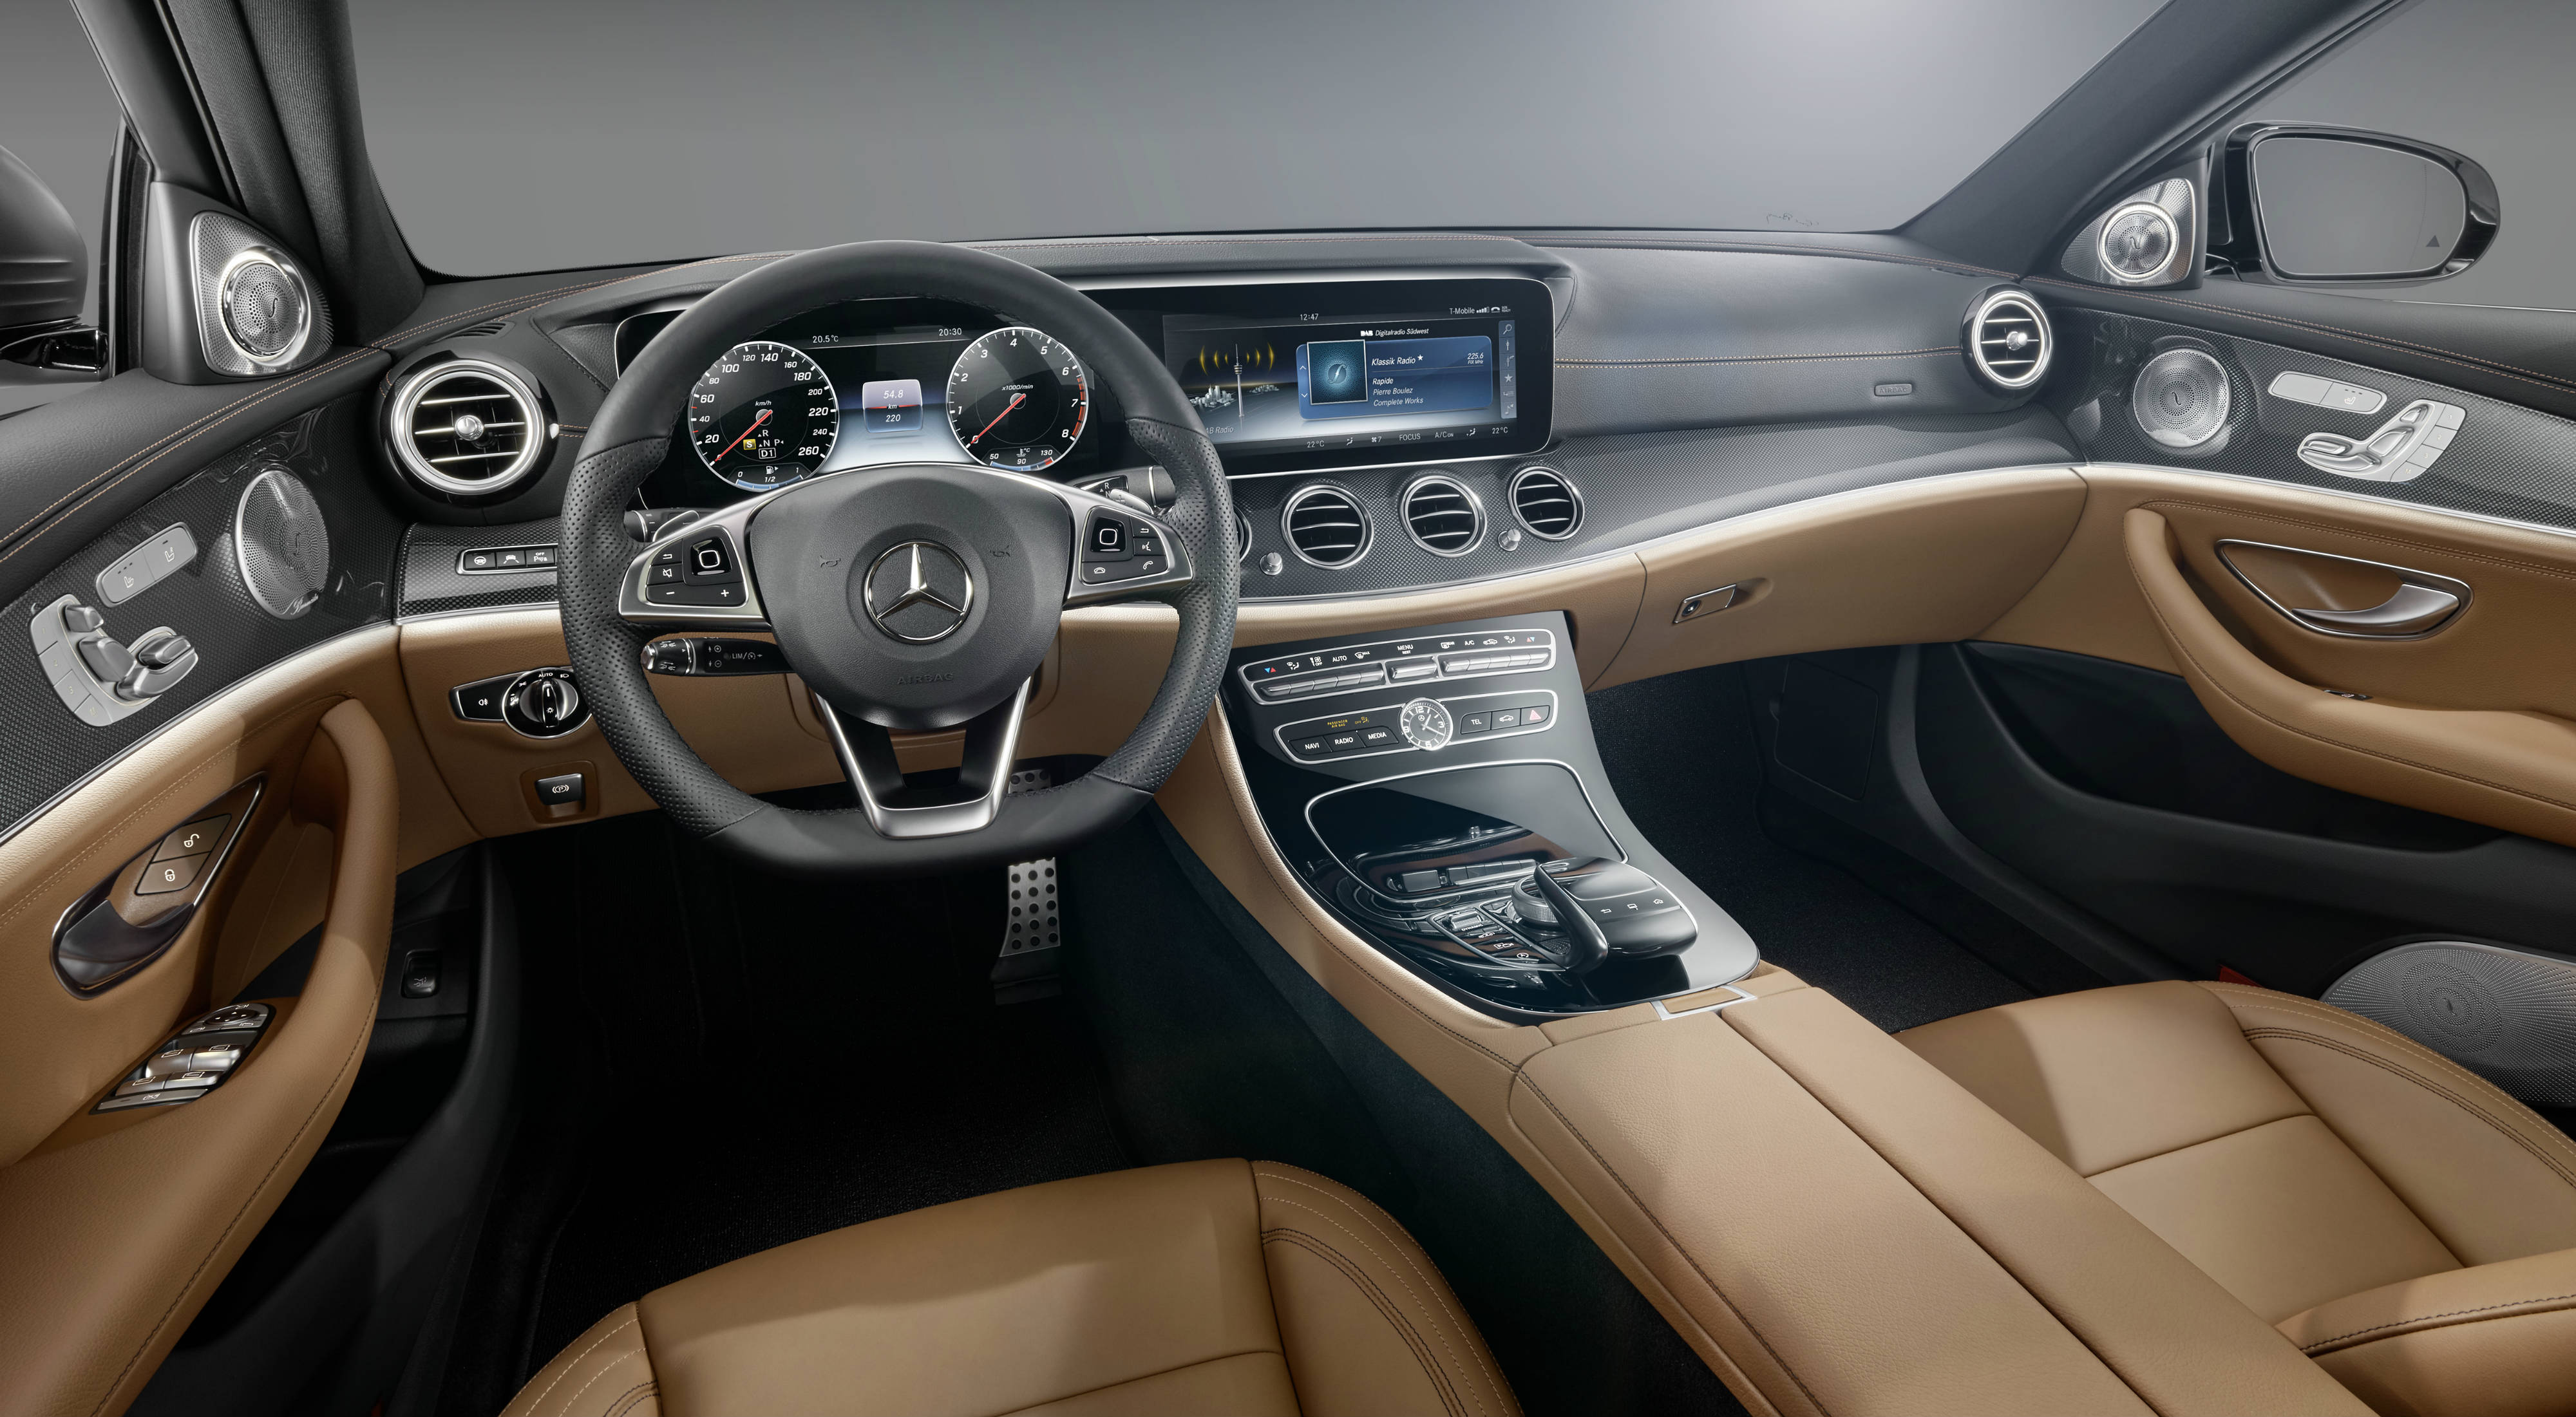 2016 Mercedes E-class interior